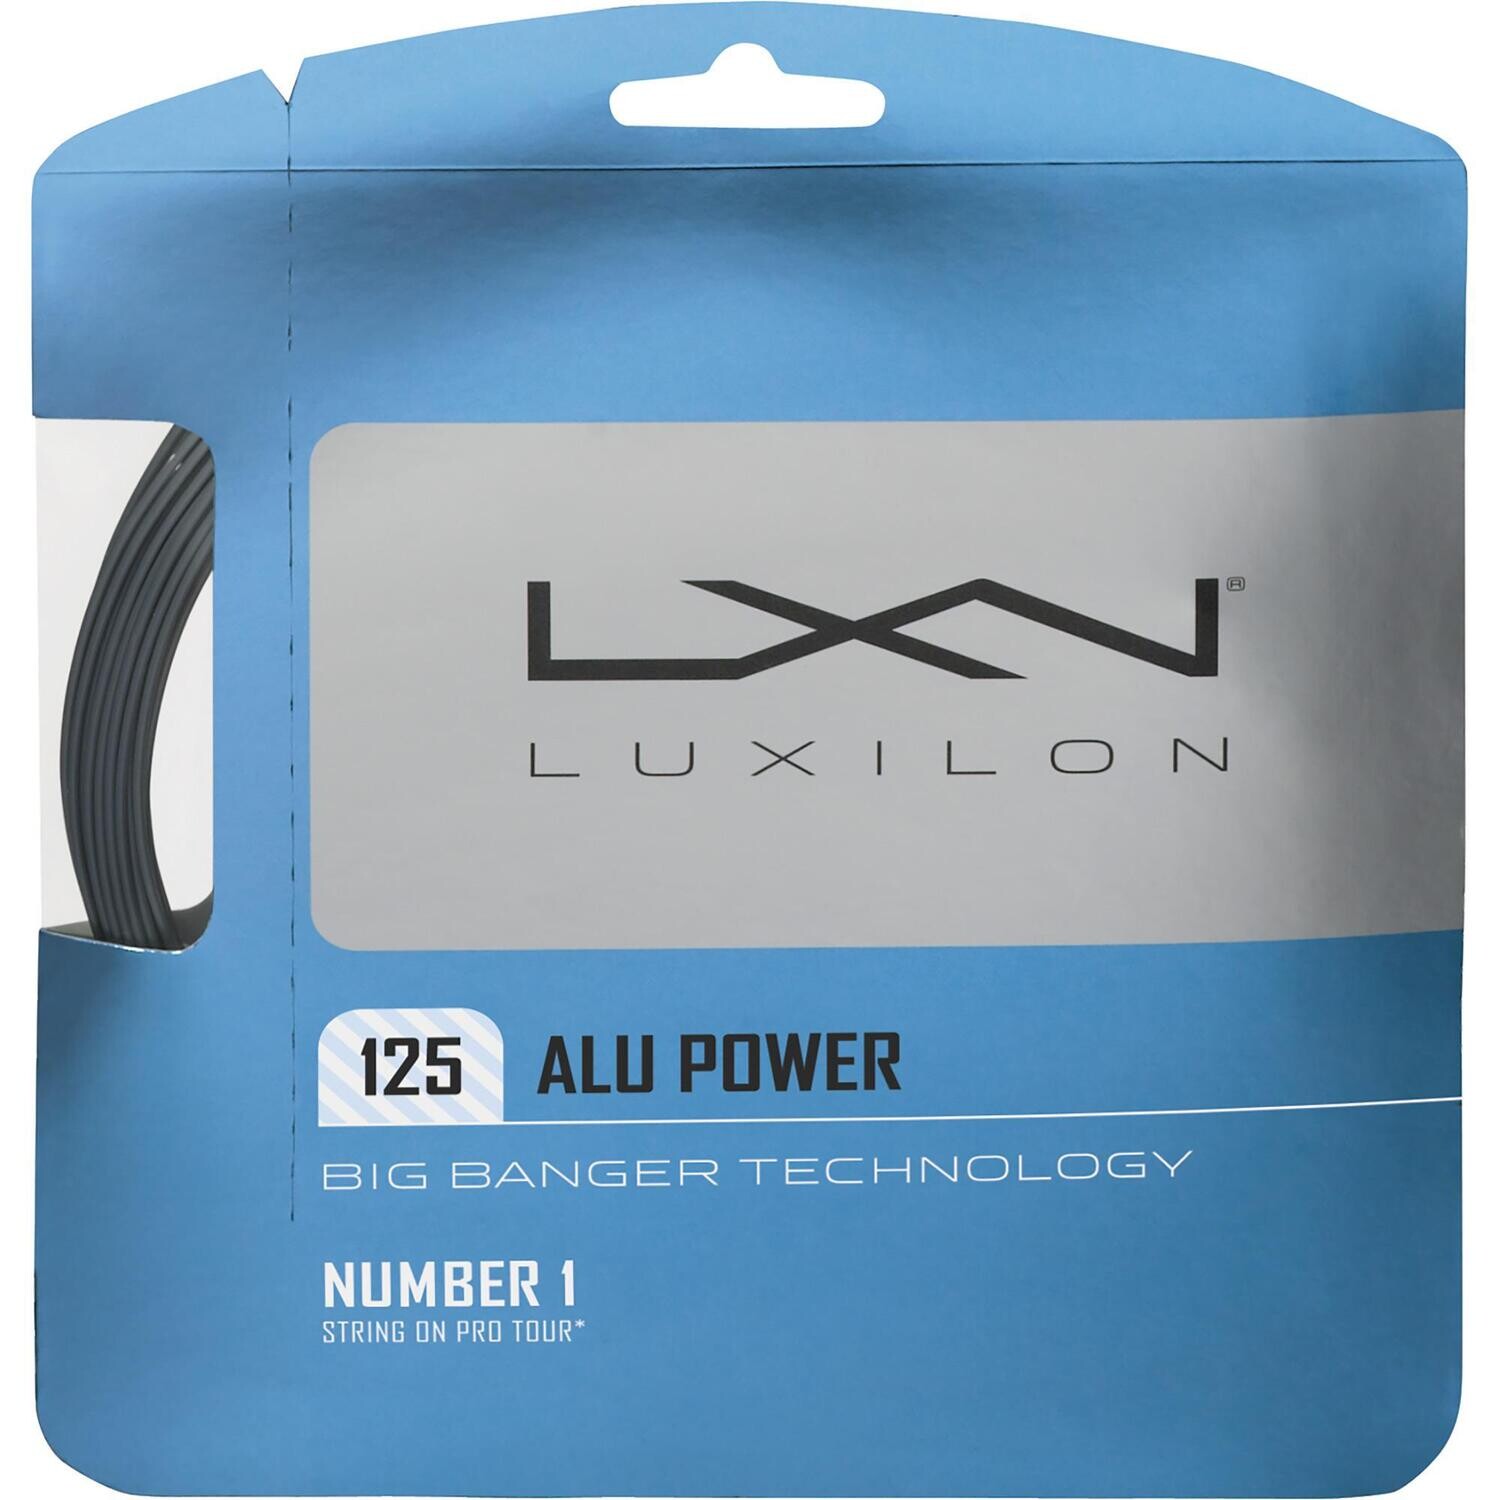 Luxilon Alu Power Tennis String Set - Silver, Gauge: 125